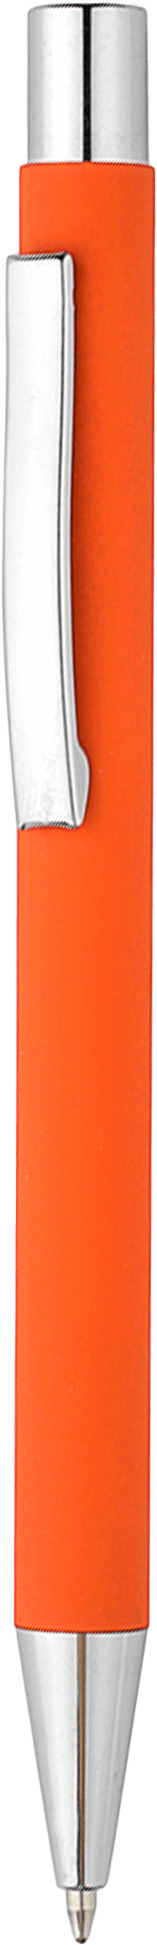 Ручка MAX SOFT MIRROR, оранжевая